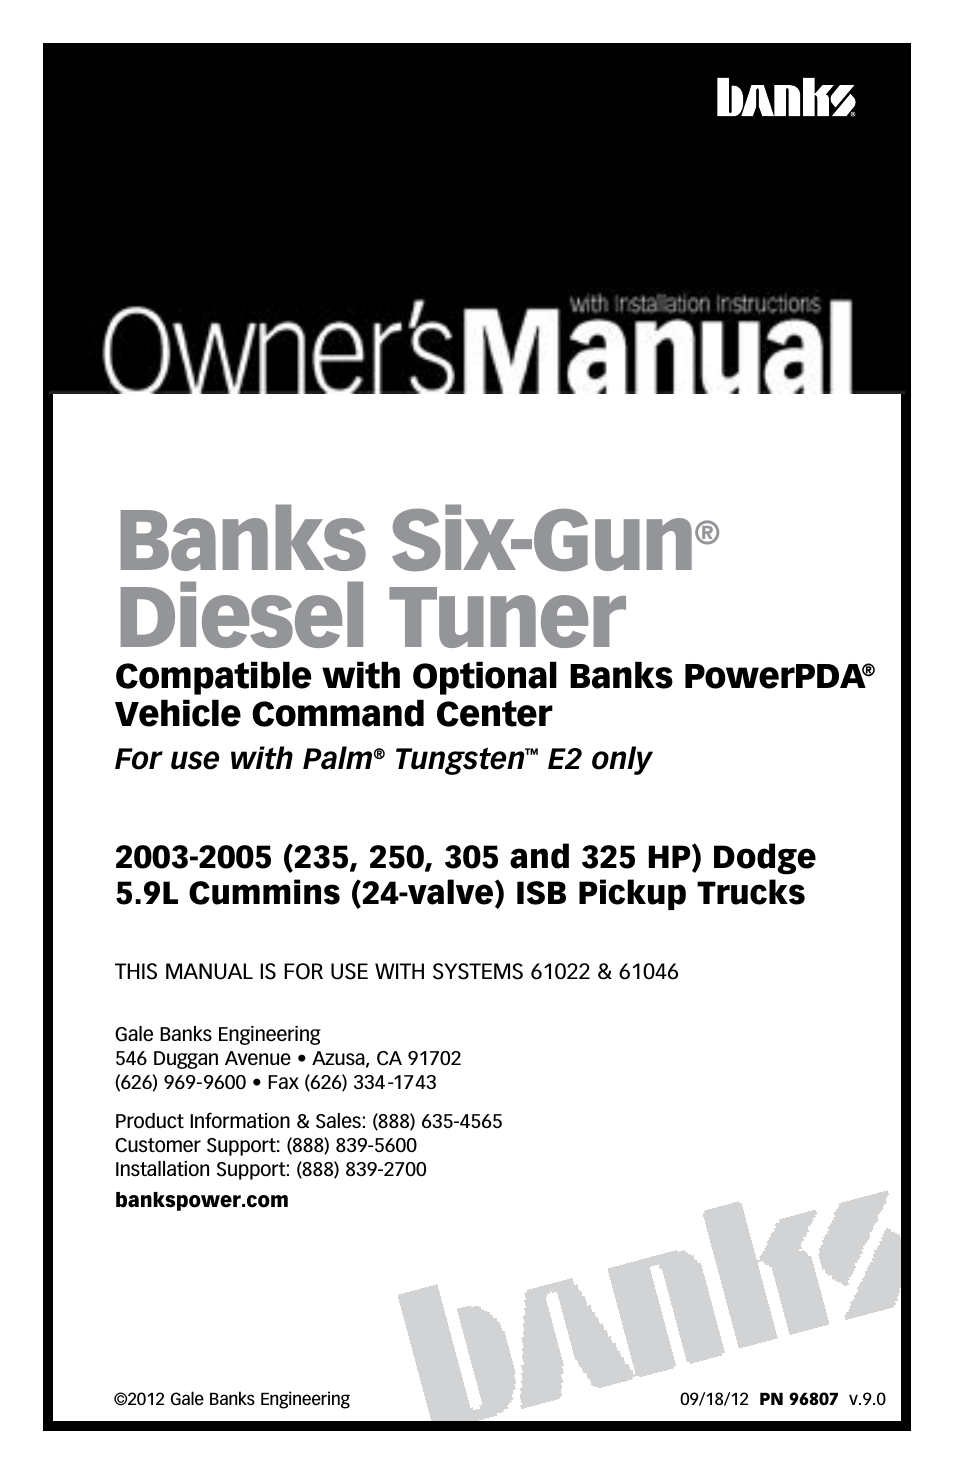 Dodge Trucks: (Diesel ’03 - 07 5.9L Cummins) Tuner- Six-Gun Diesel Tuner (235, 250, 305, 325 HP Dodge 5.9L Cummins (24-valve) Trucks) '03-05 Compatible with Optional PowerPDA